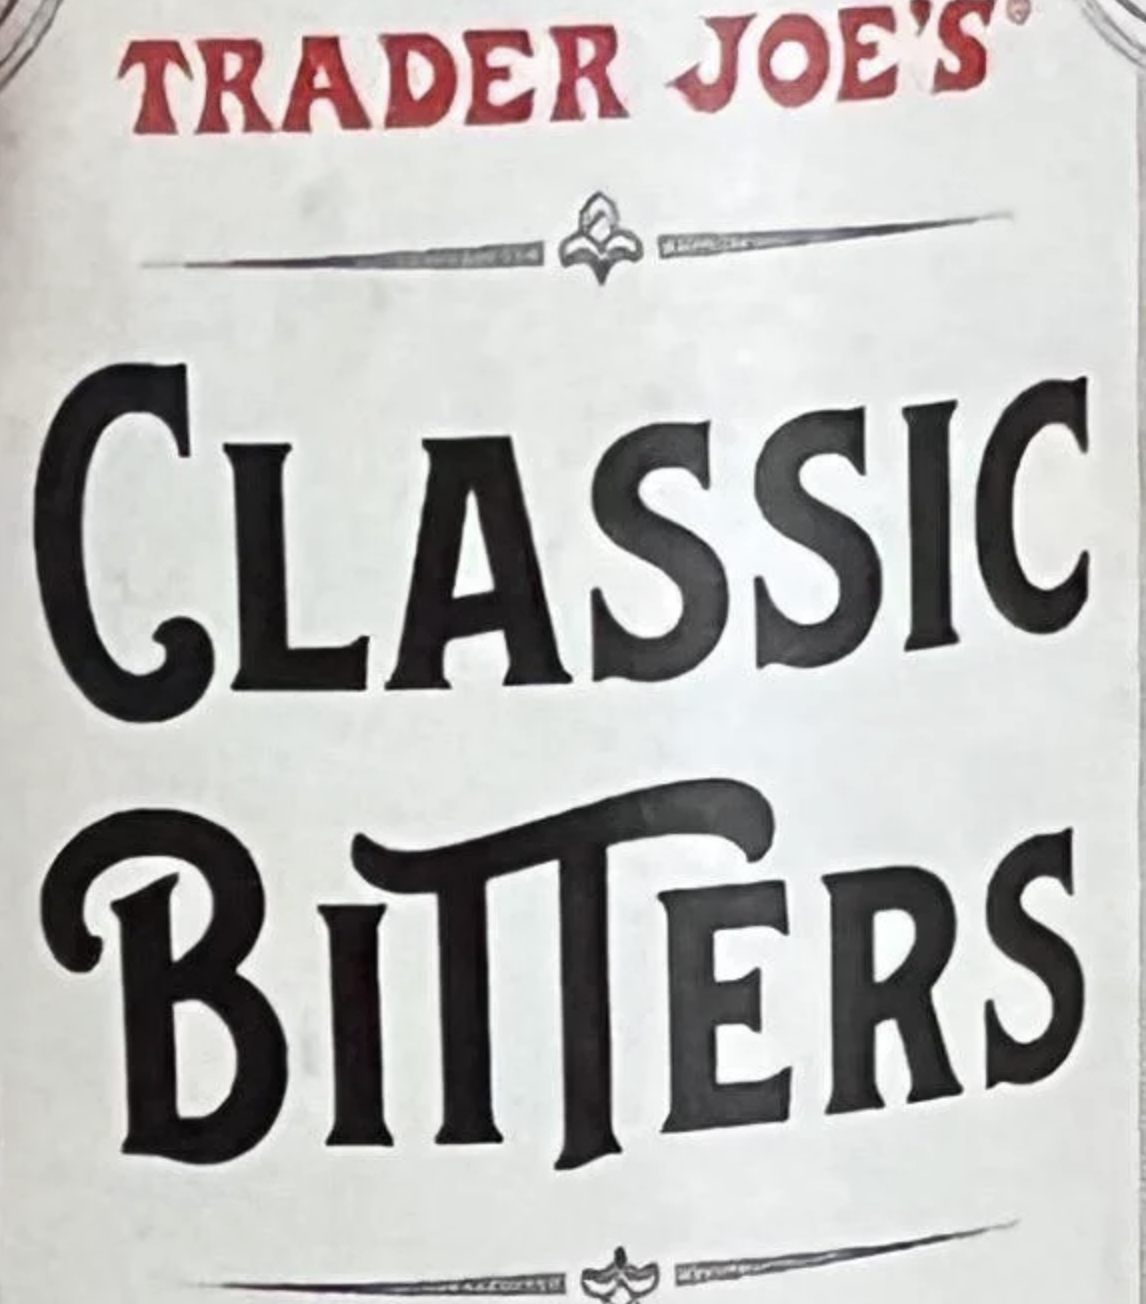 Trader Joe’s Classic Bitters Reviews